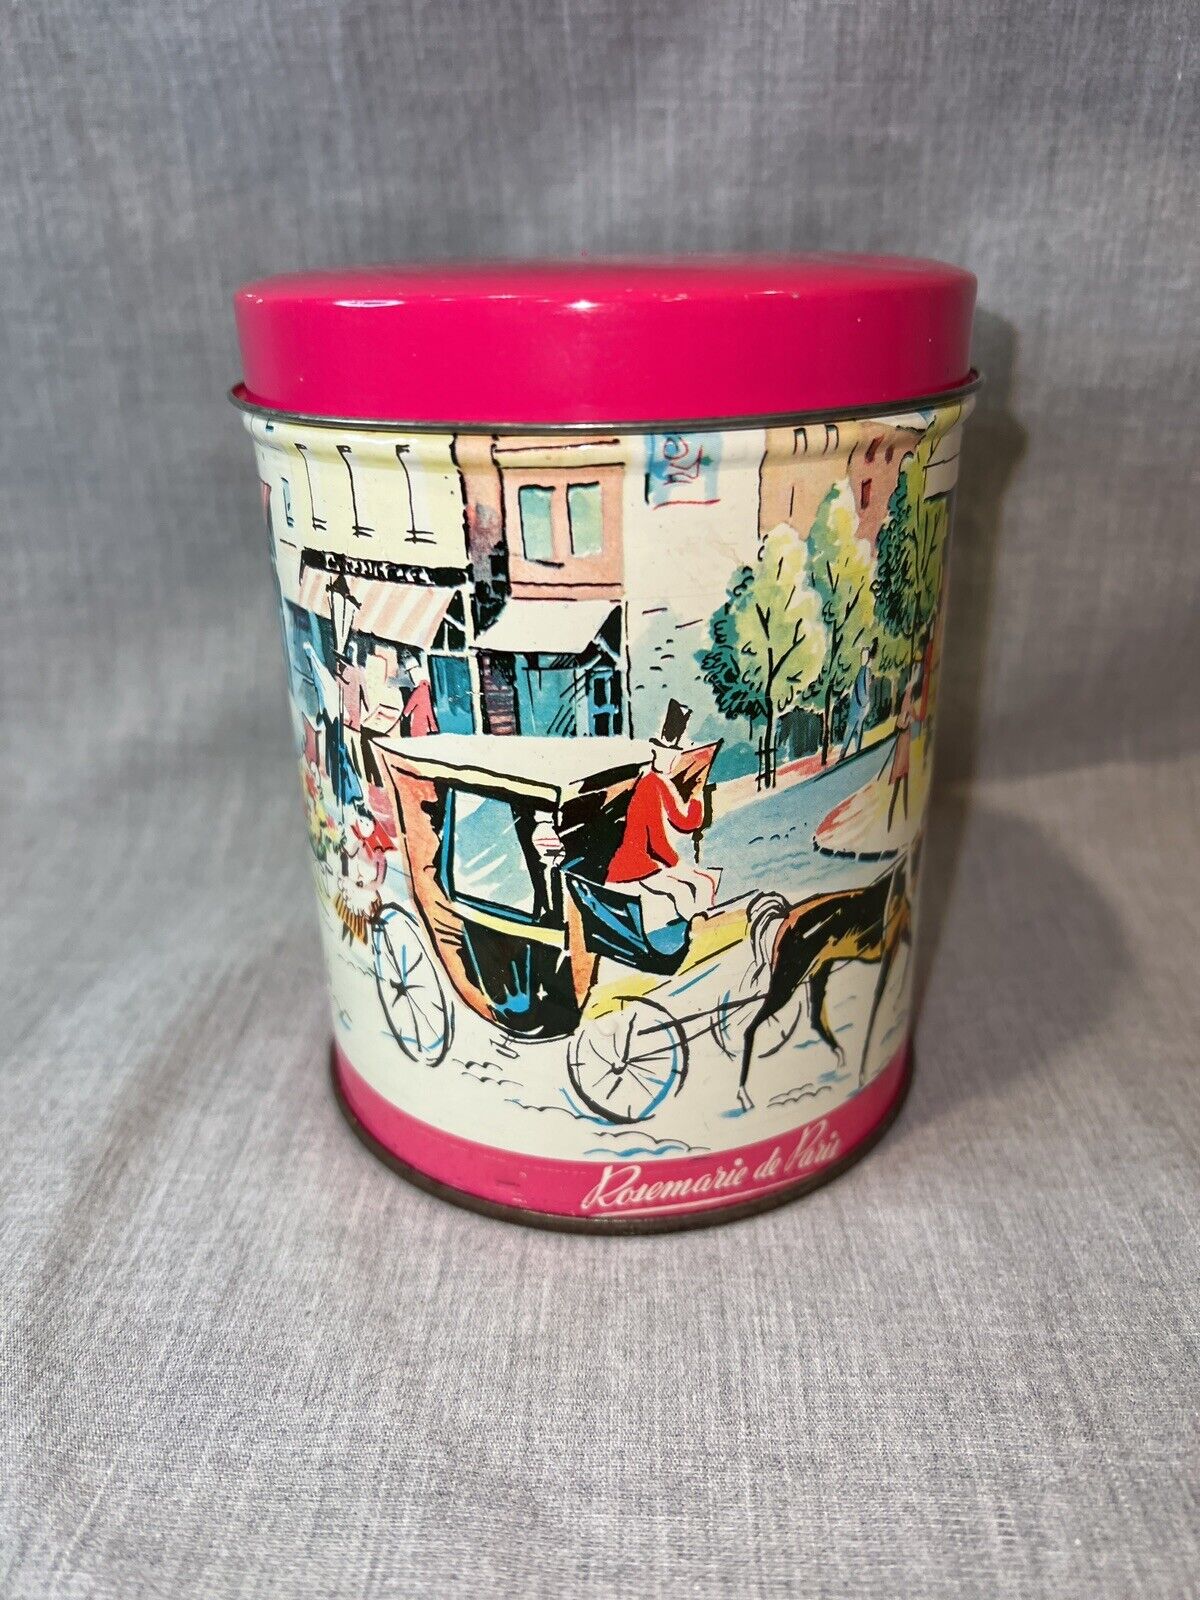 Vintage Rosemarie De Paris Candy Tin, Horse Drawn Carriage, City Scene